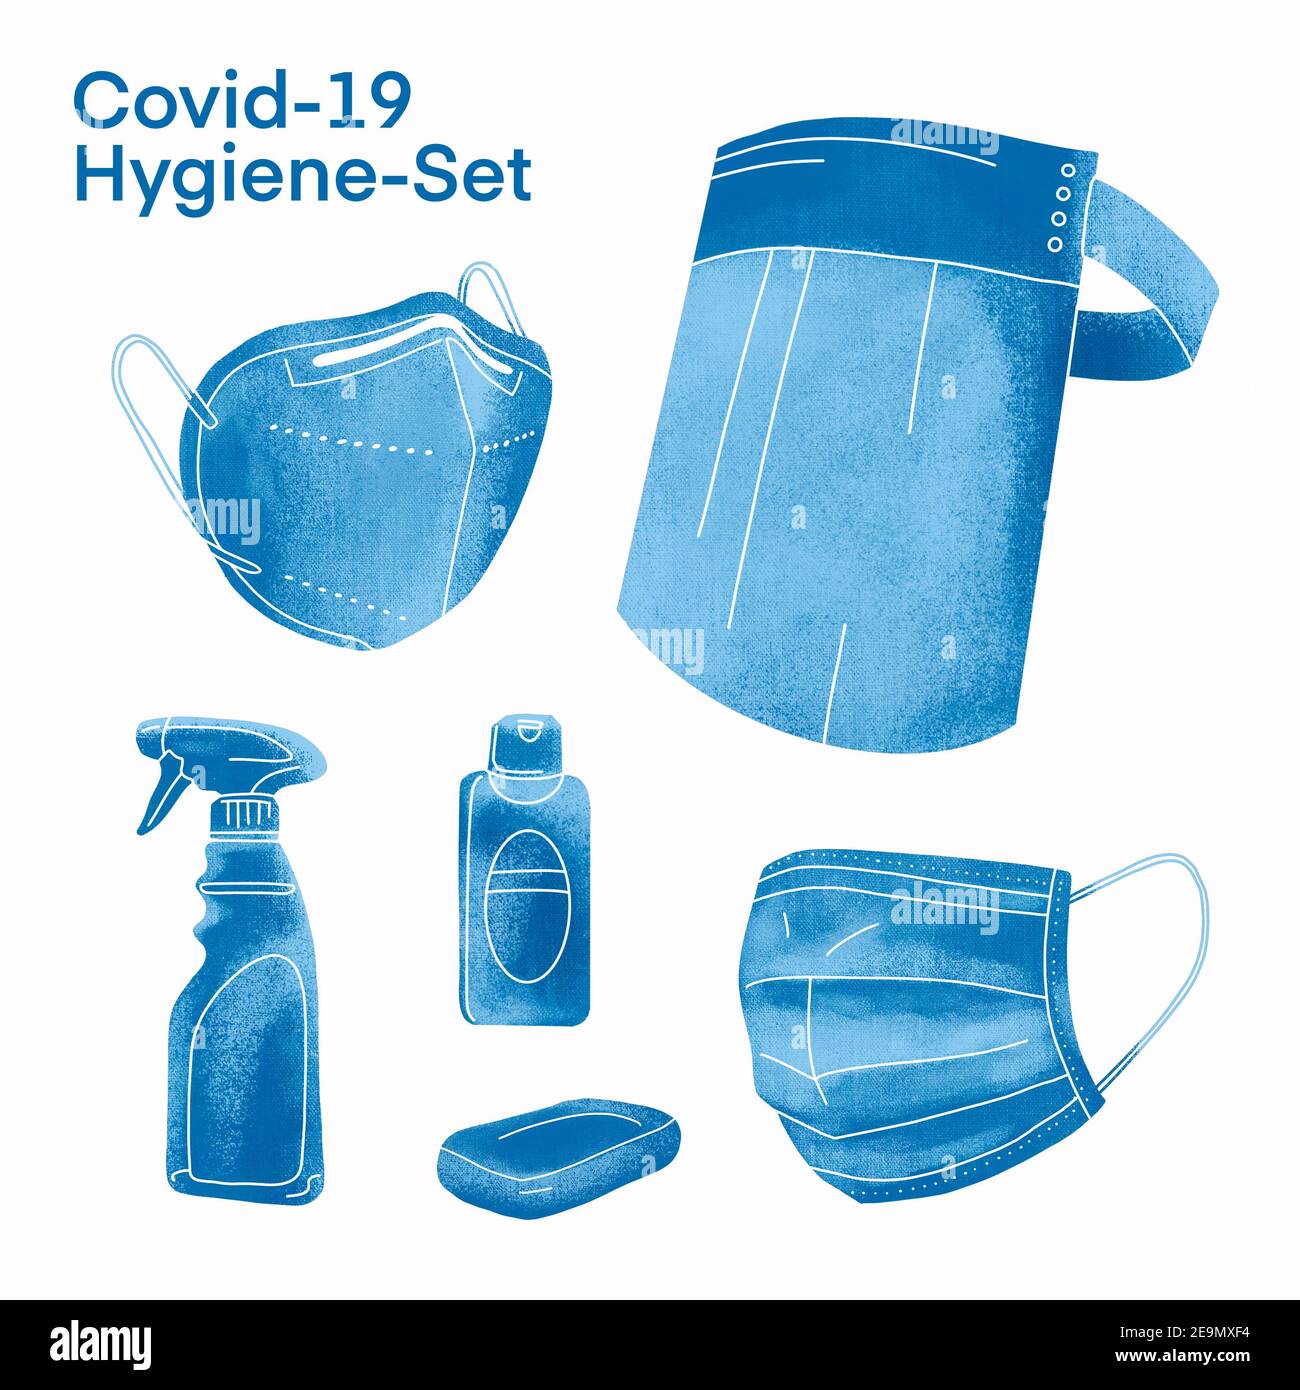 Kit vaccino Covid-19 illustrato, con maschera, fiala e siringa – blu Foto Stock